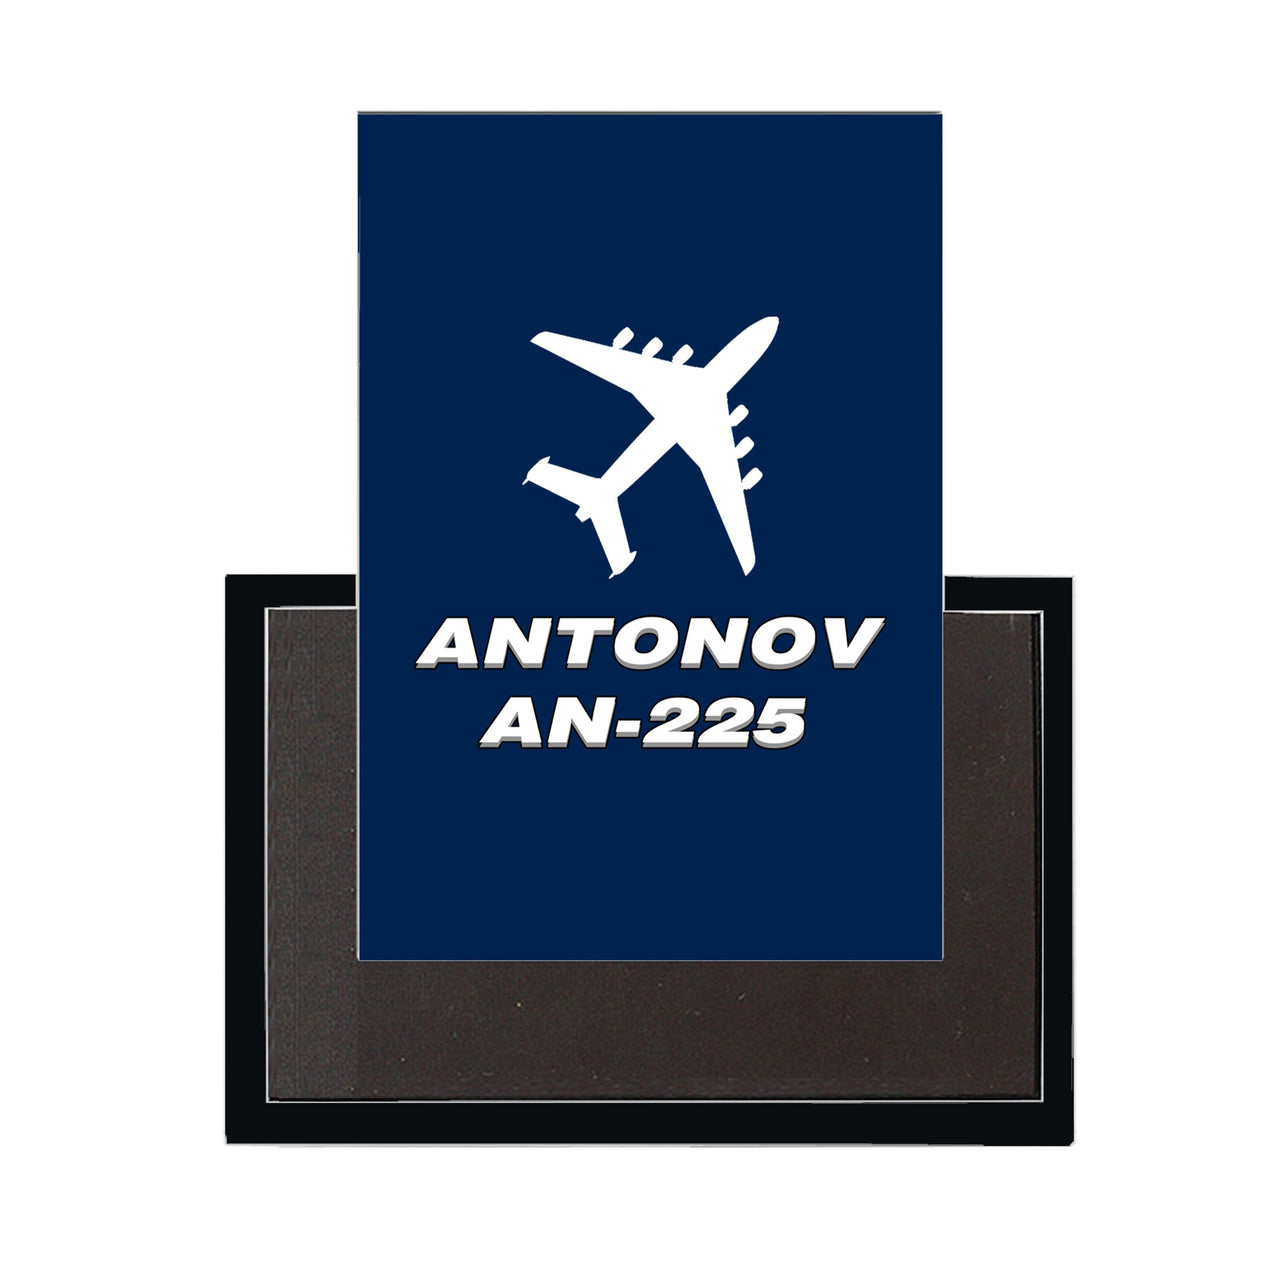 Antonov AN-225 (28) Designed Magnets